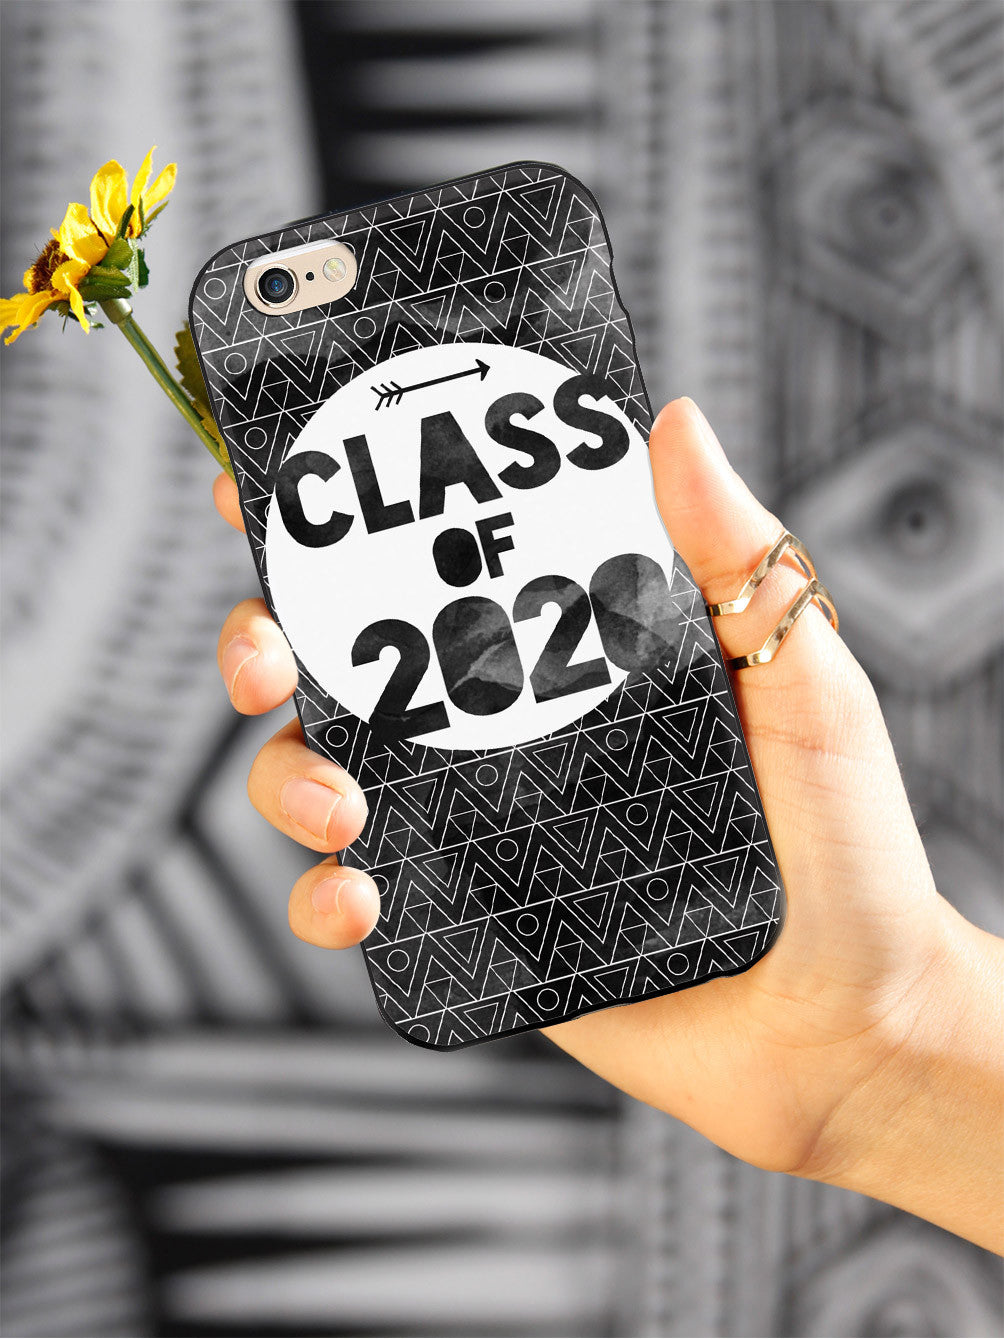 Class of 2020 - Black Watercolor Case